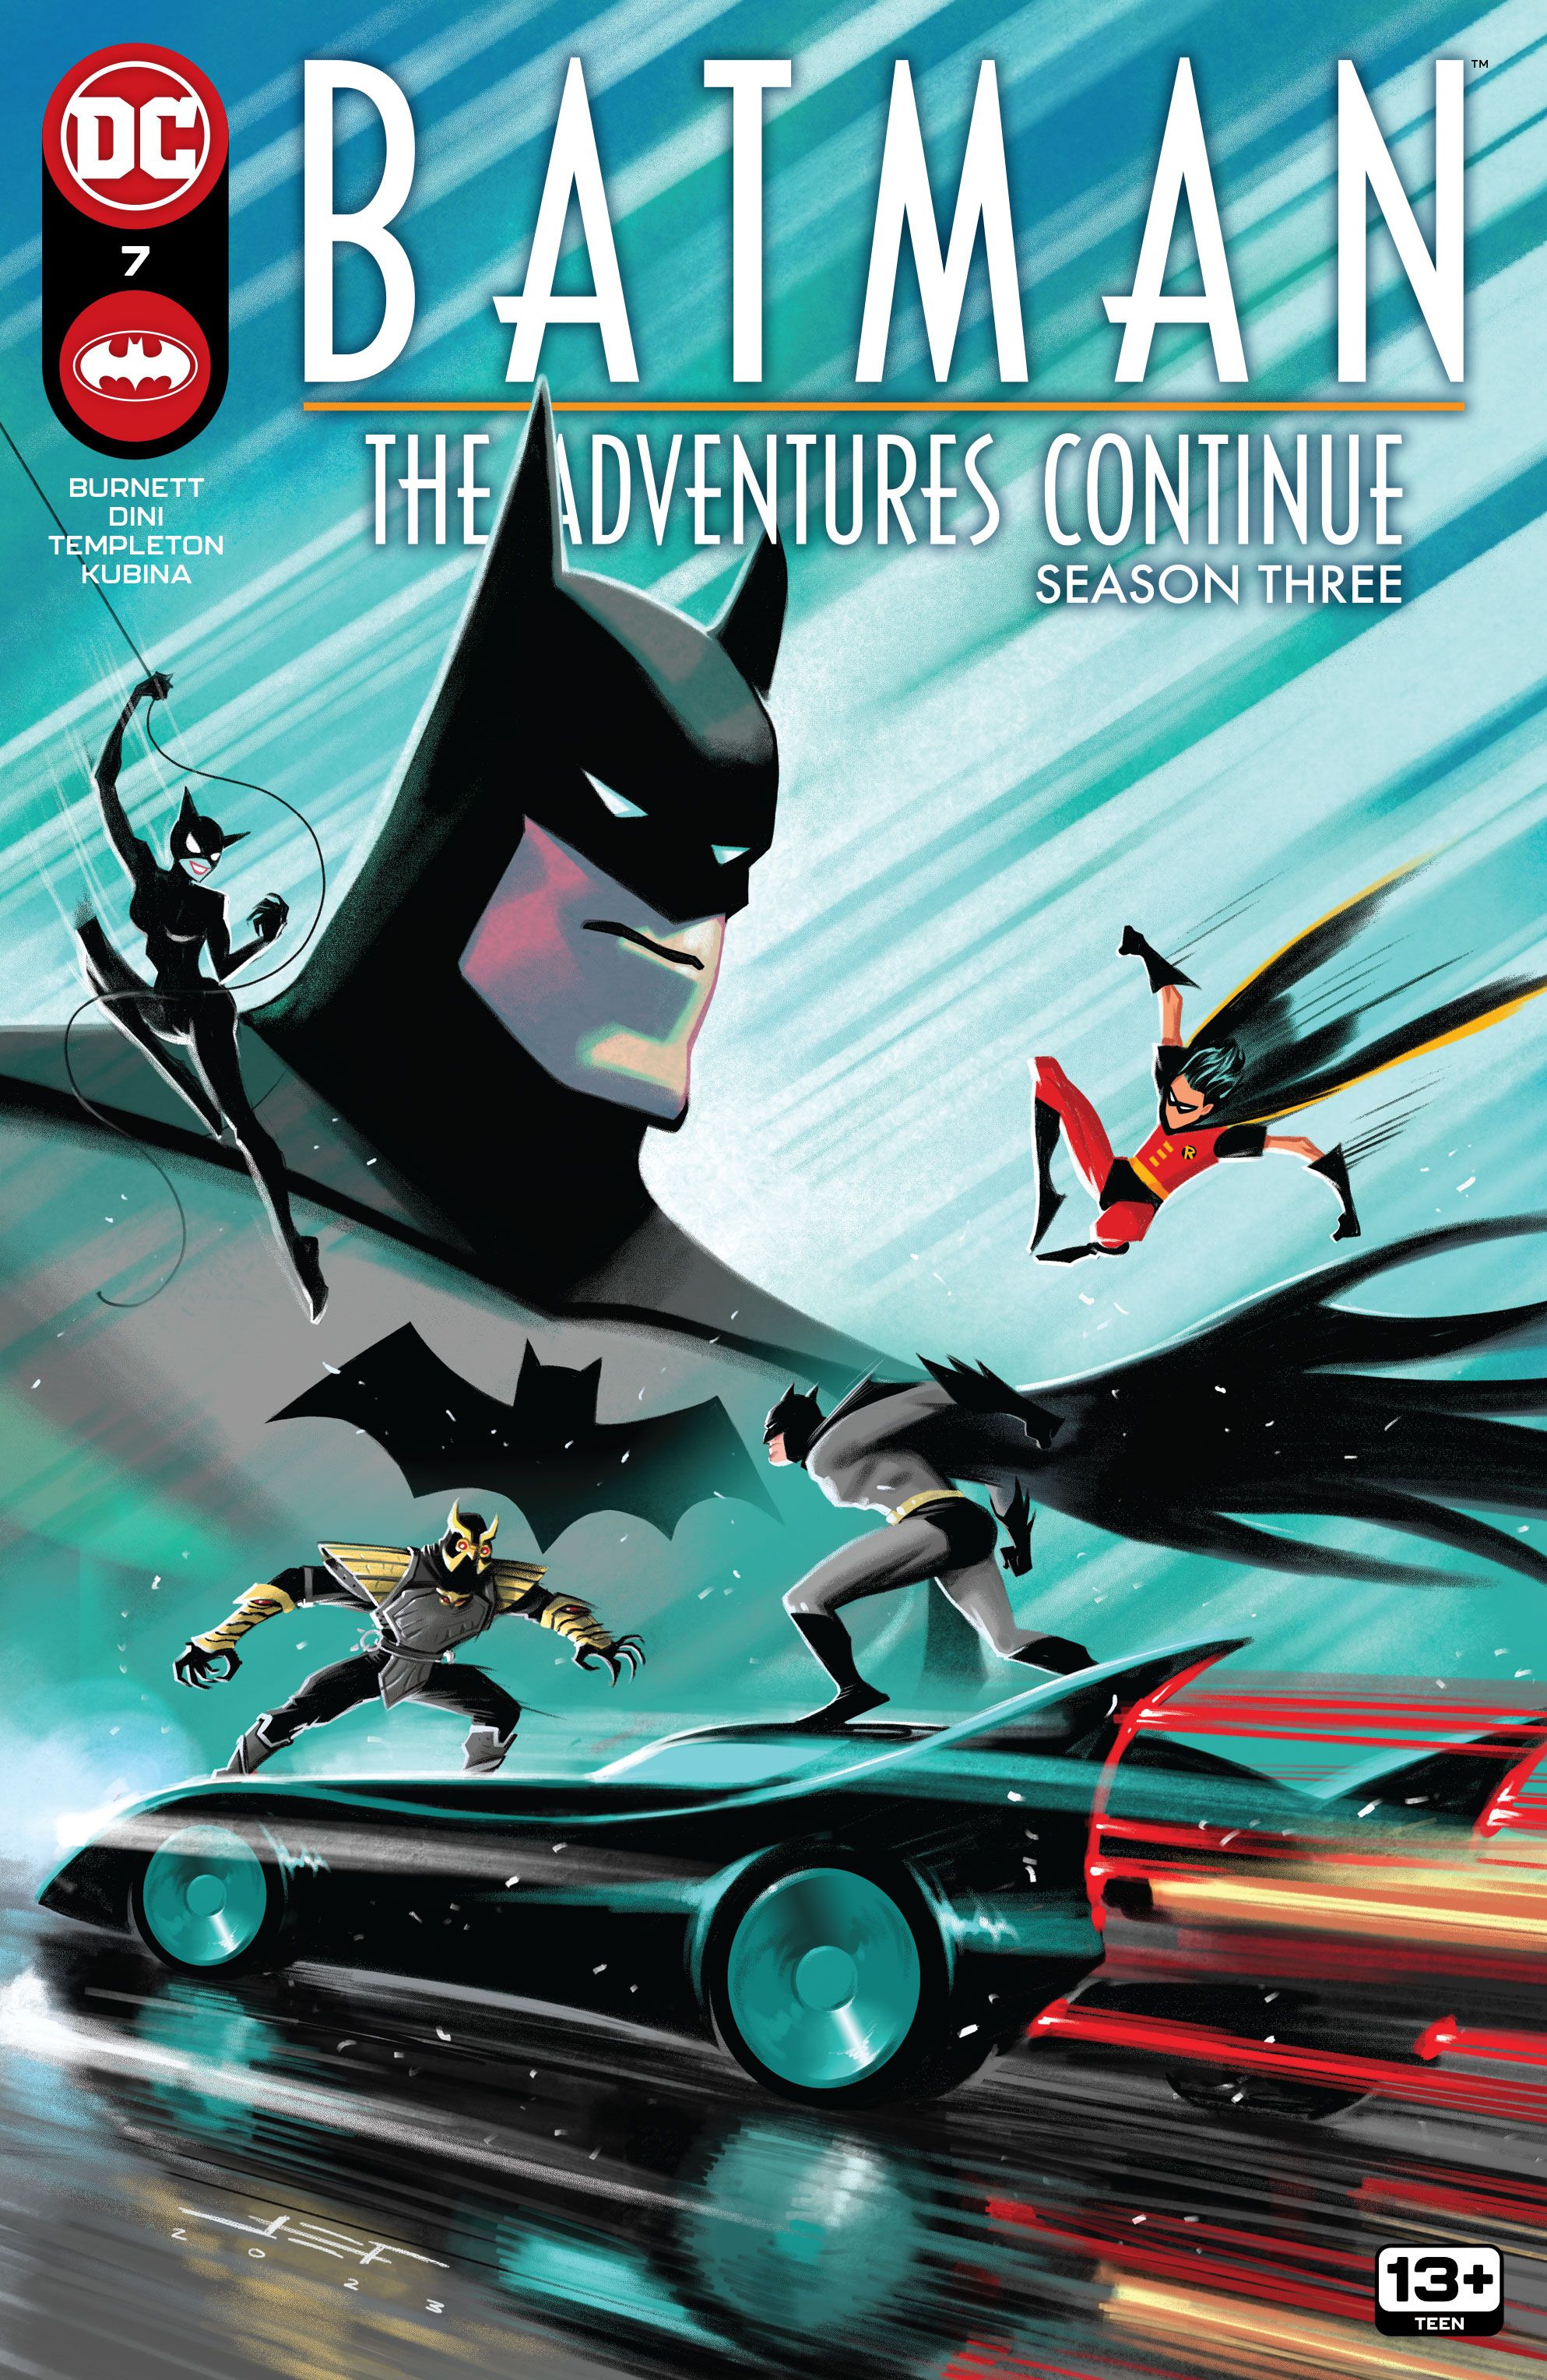 Batman-The-Adventures-Continue-Season-Three-7-1